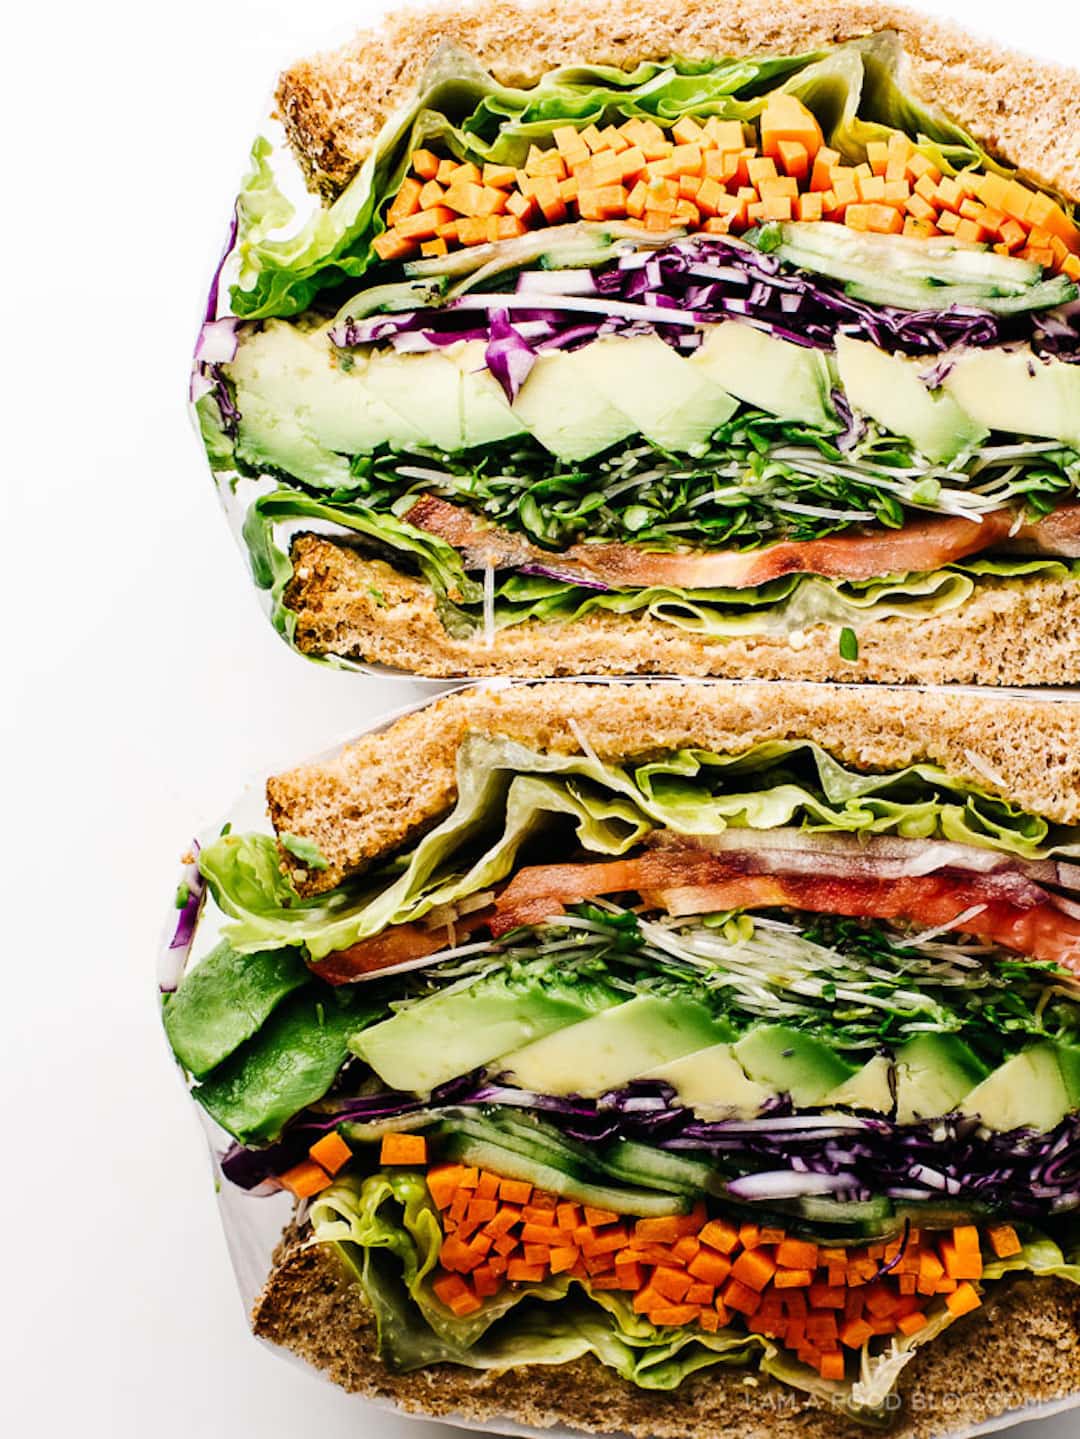 11 Yummy Plant Based Sandwiches - Ultimate Veggie Sandwich by I'm A Food Blog